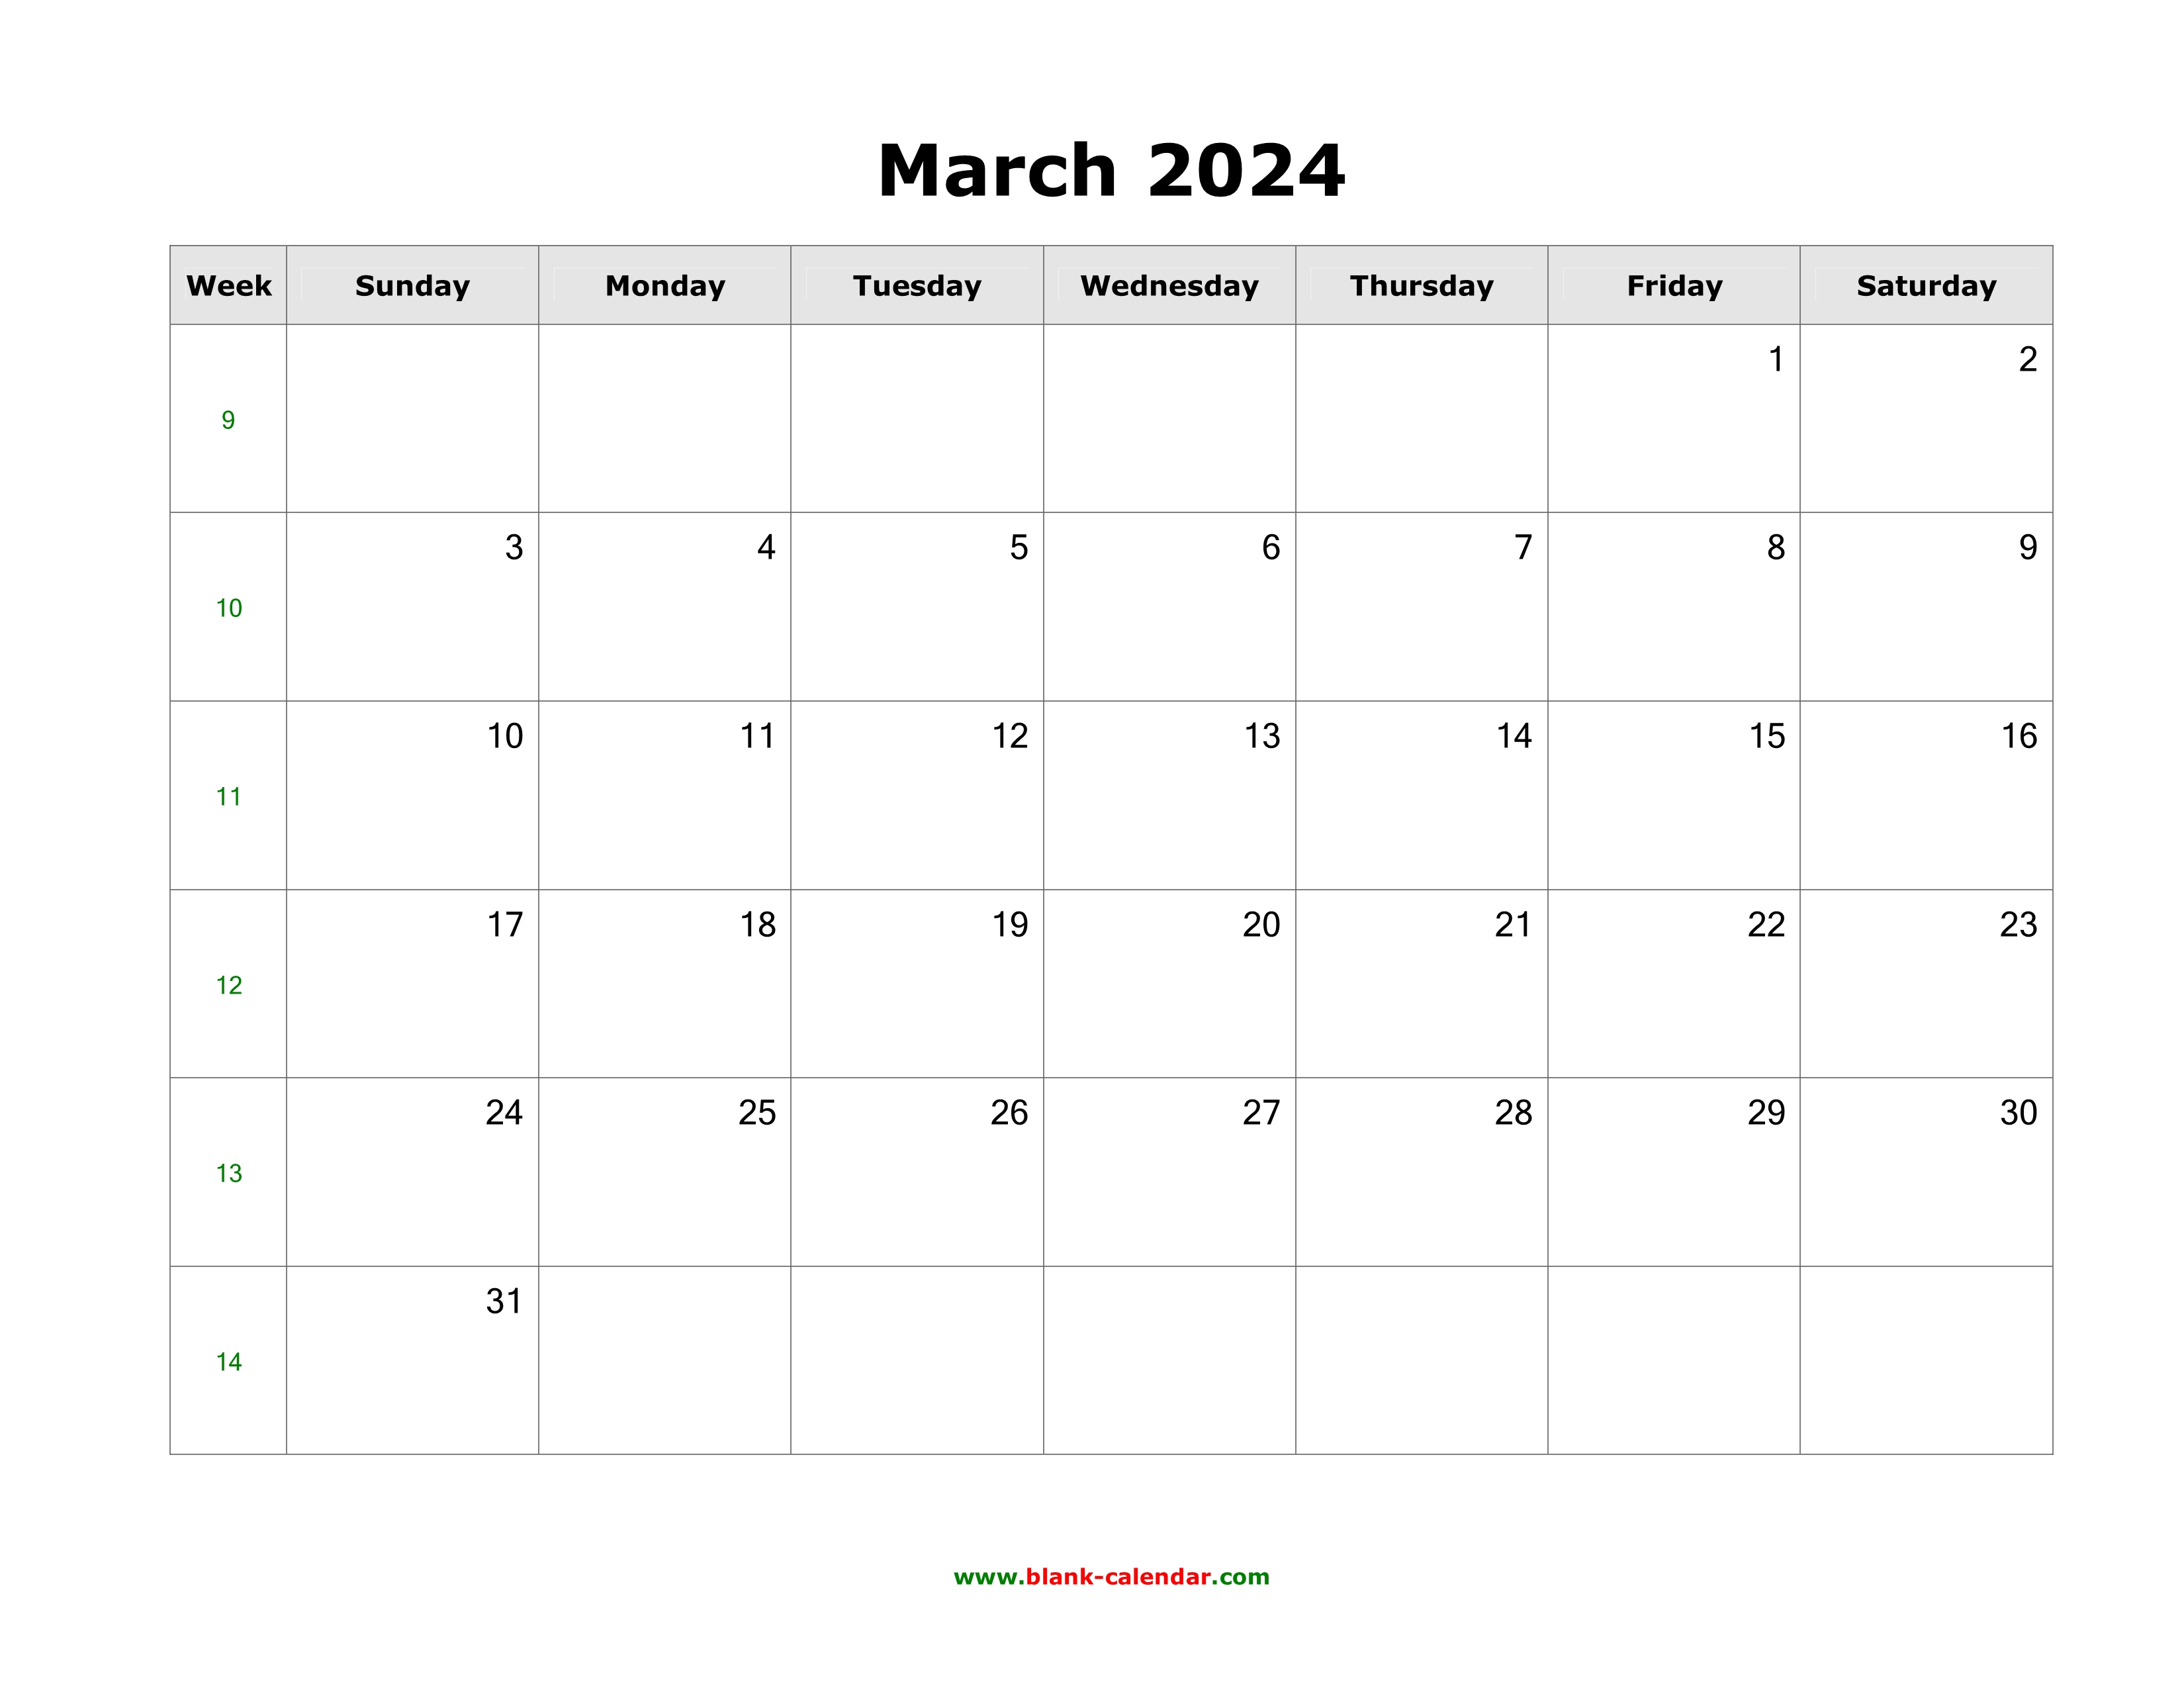 Download March 2024 Blank Calendar (horizontal)